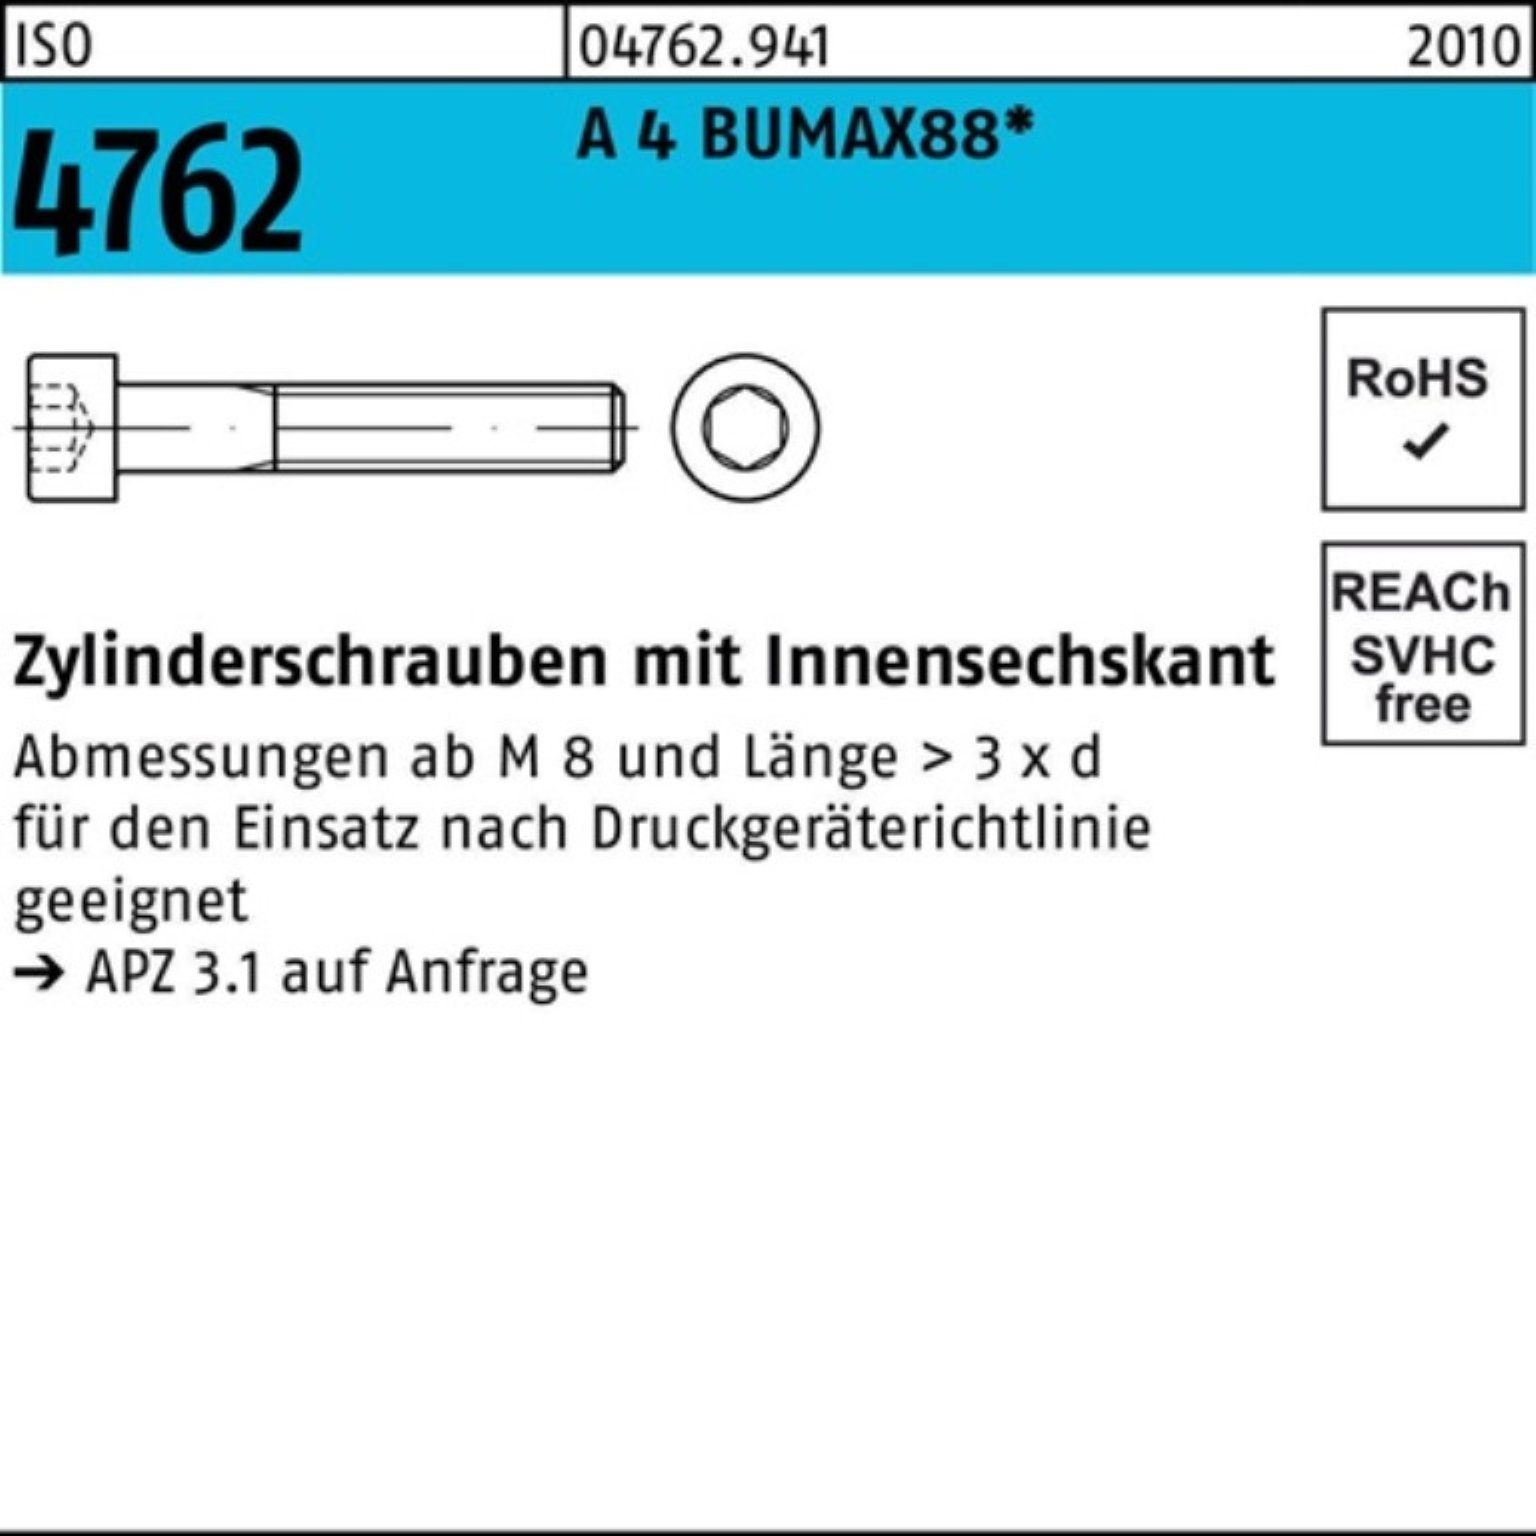 ISO Zylinderschraube 40 25 Zylinderschraube 4762 4 BUMAX88 Bufab 100er M16x Pack A Innen-6kt